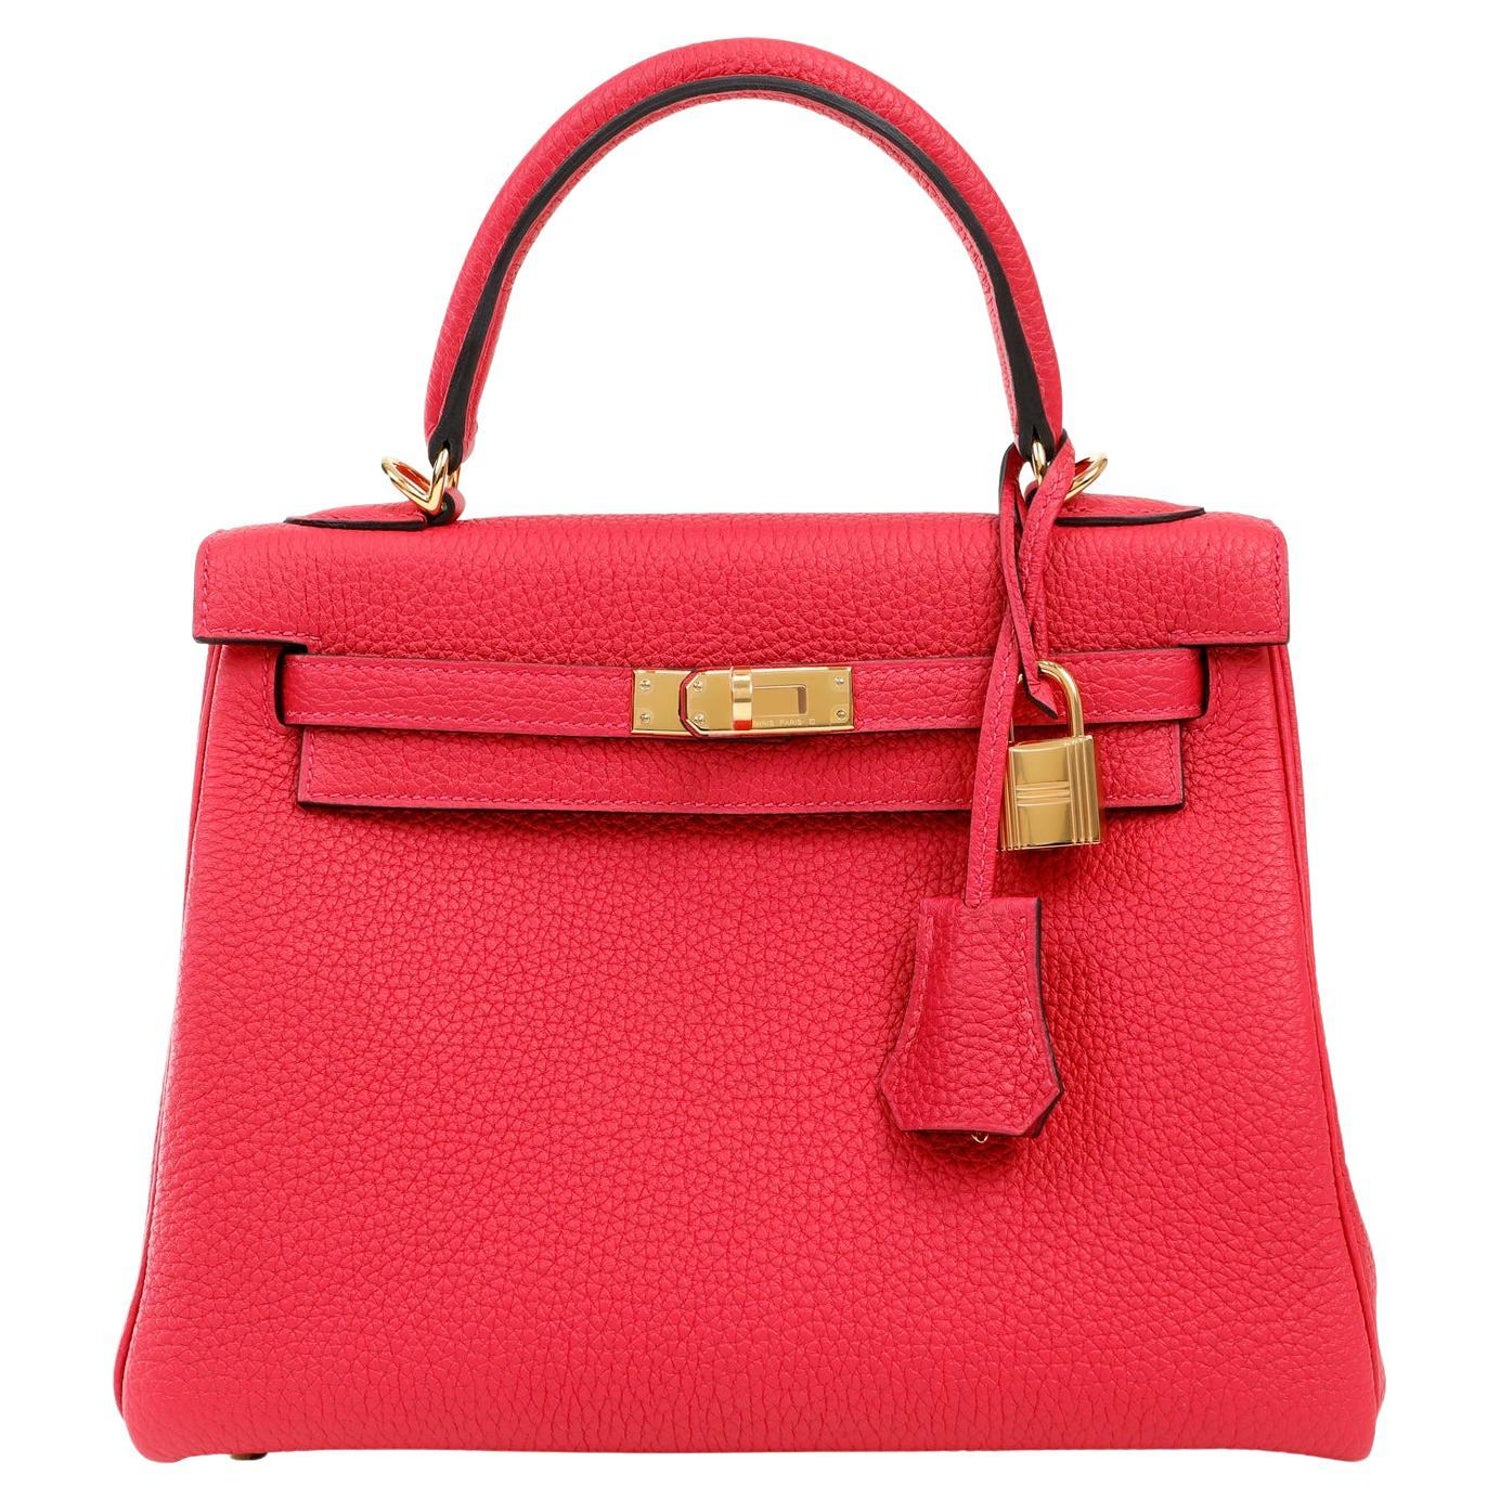 Hermès Kelly Rose Gold Bag - USD 2 Million